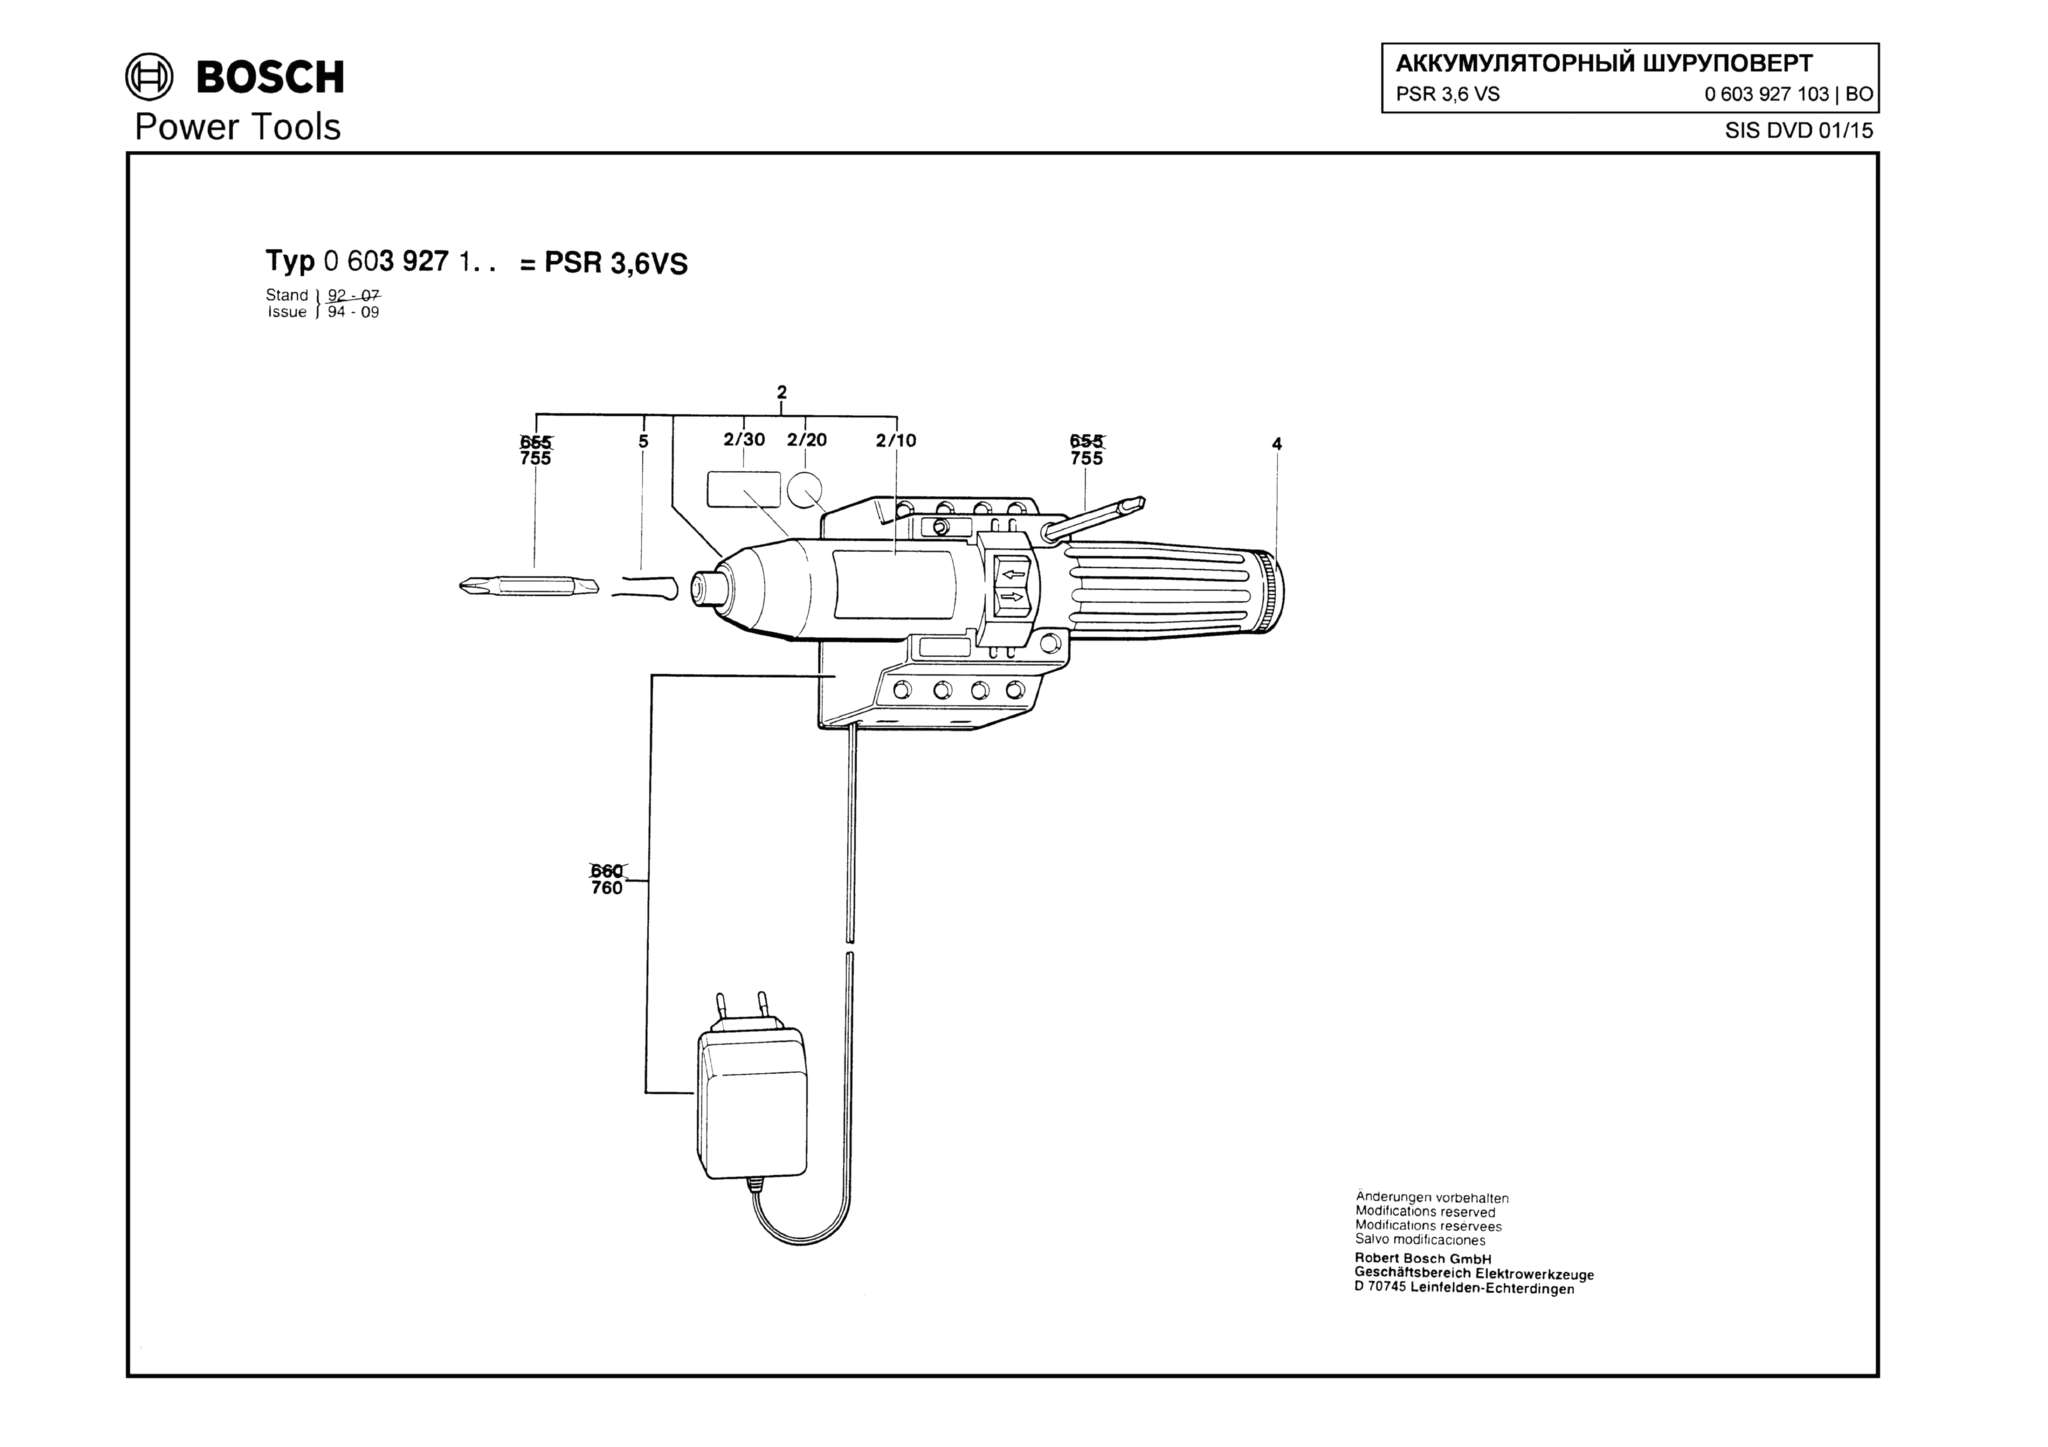 Запчасти, схема и деталировка Bosch PSR 3,6 VS (ТИП 0603927103)